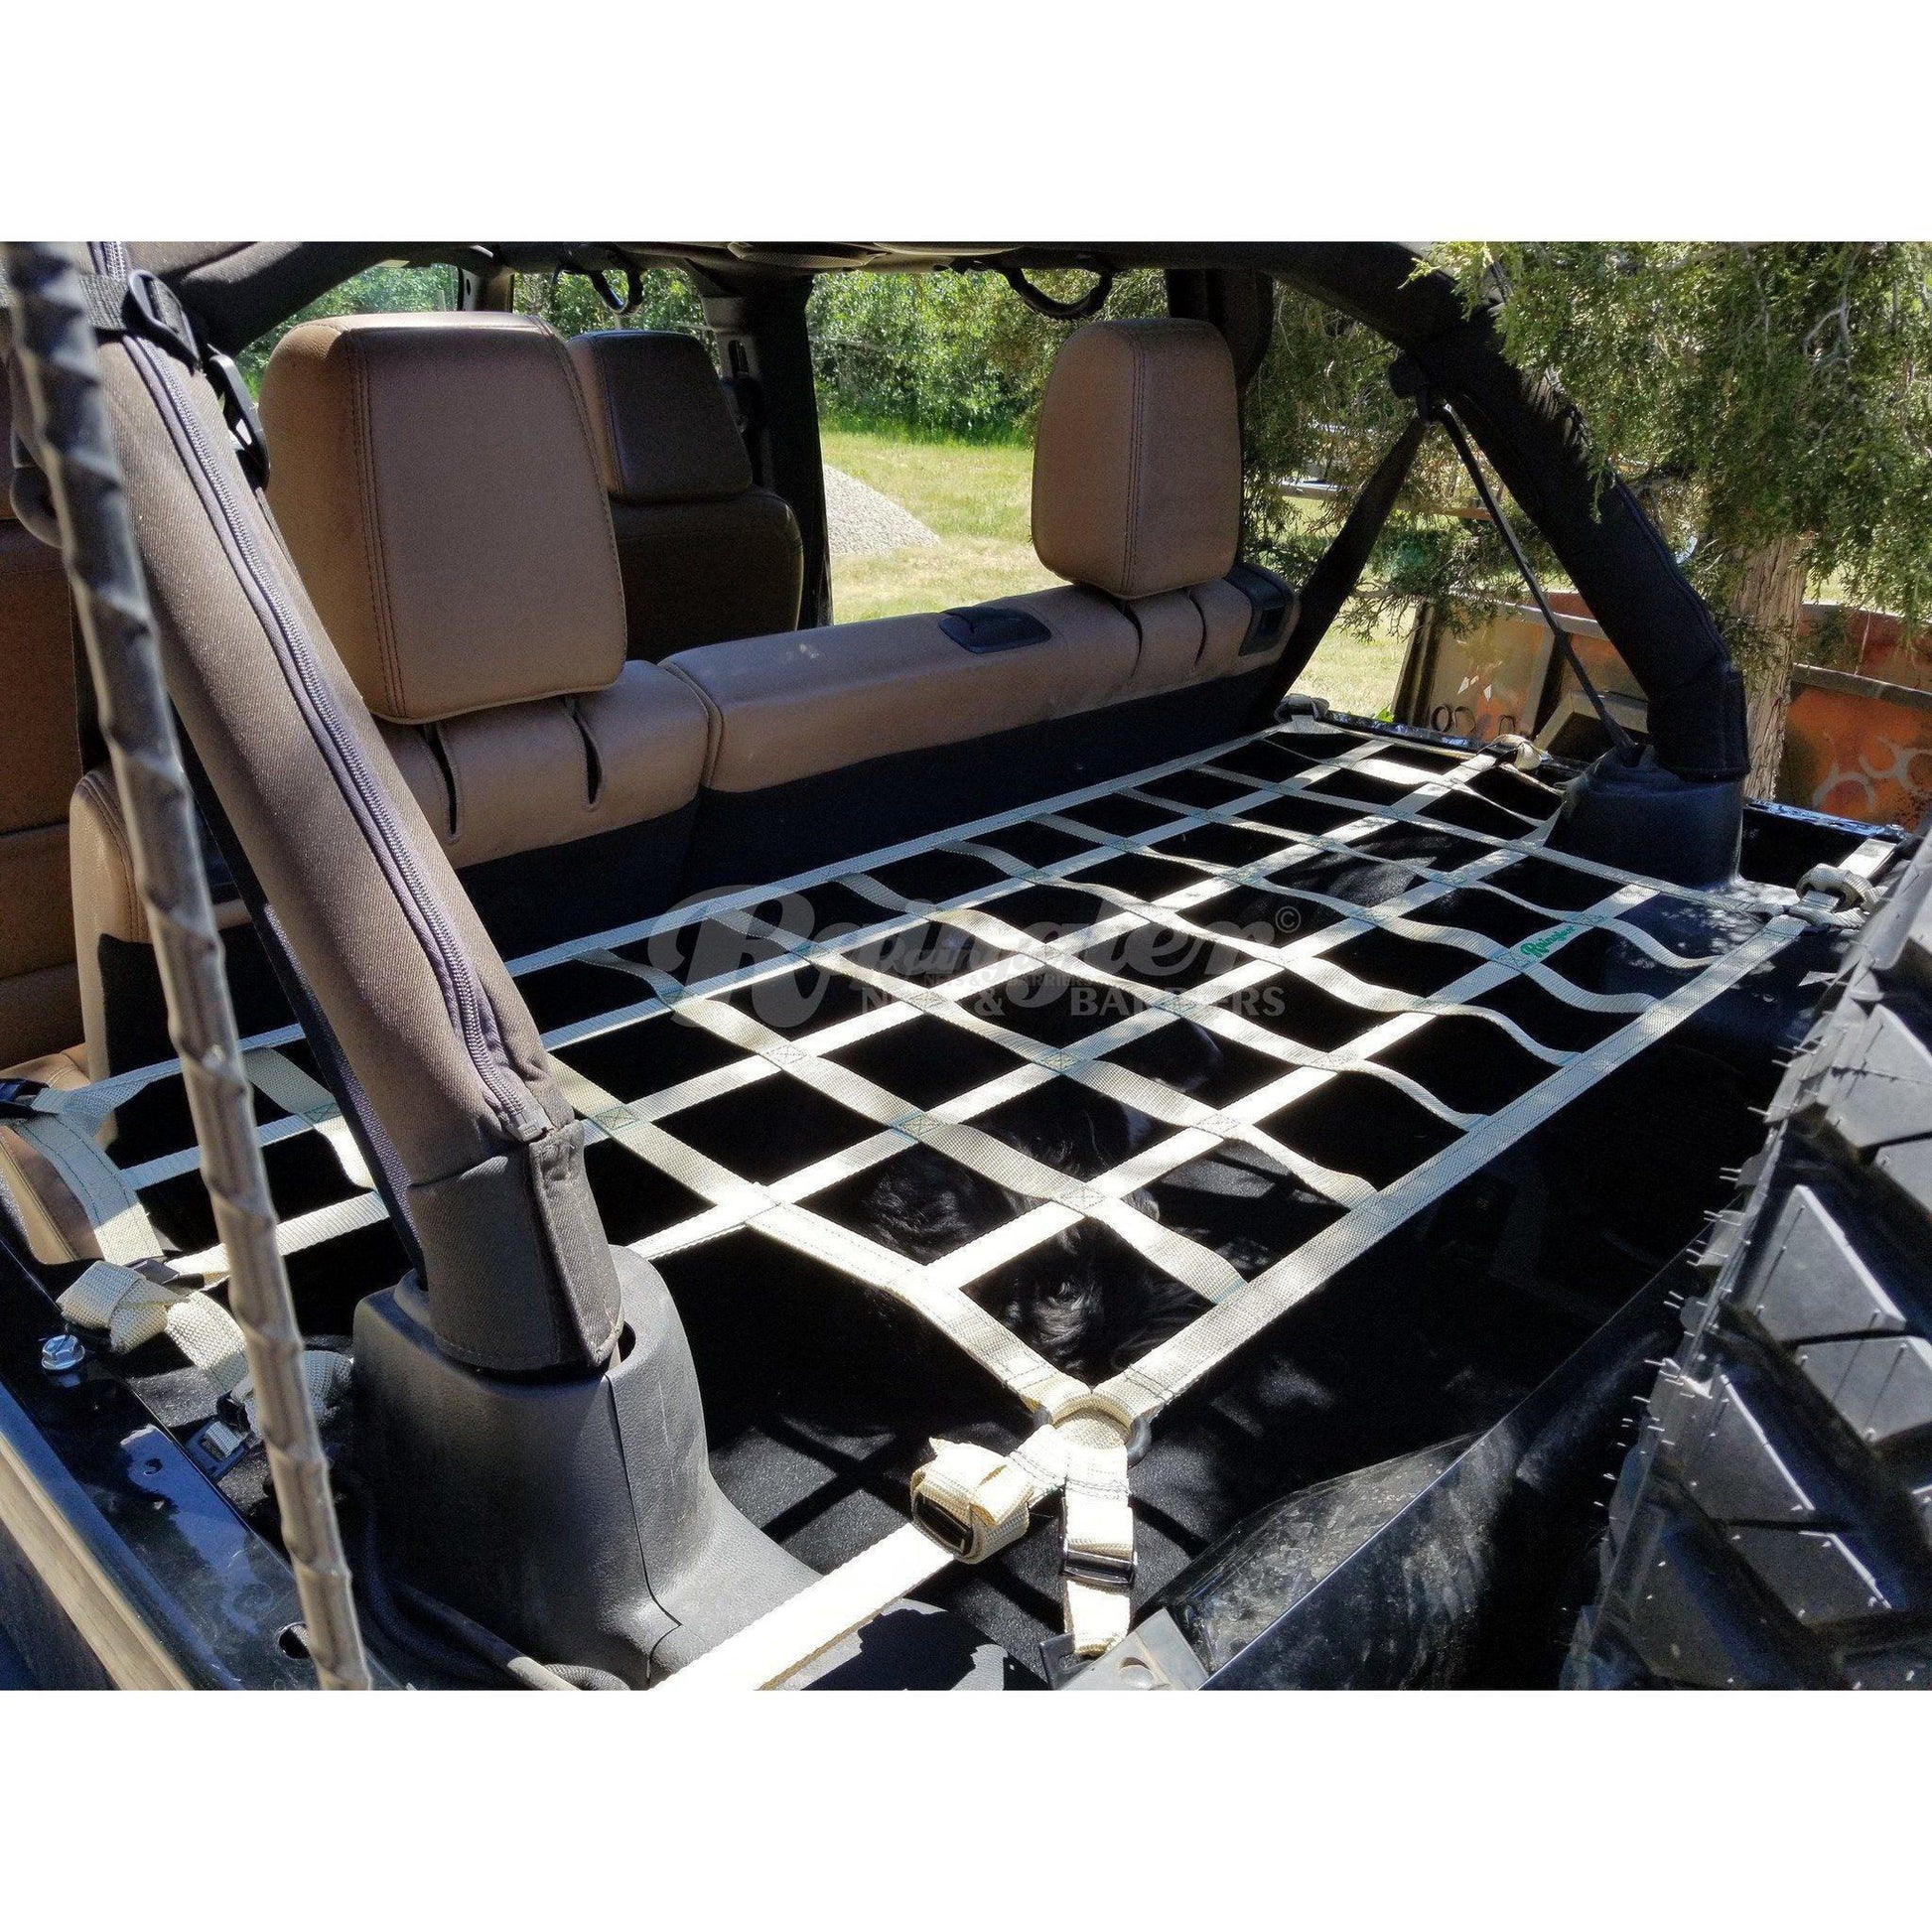 BLEM 2007 - 2018 Jeep Wrangler Unlimited JKU 4 Door Cargo Area Containment and Shelf Net-Raingler